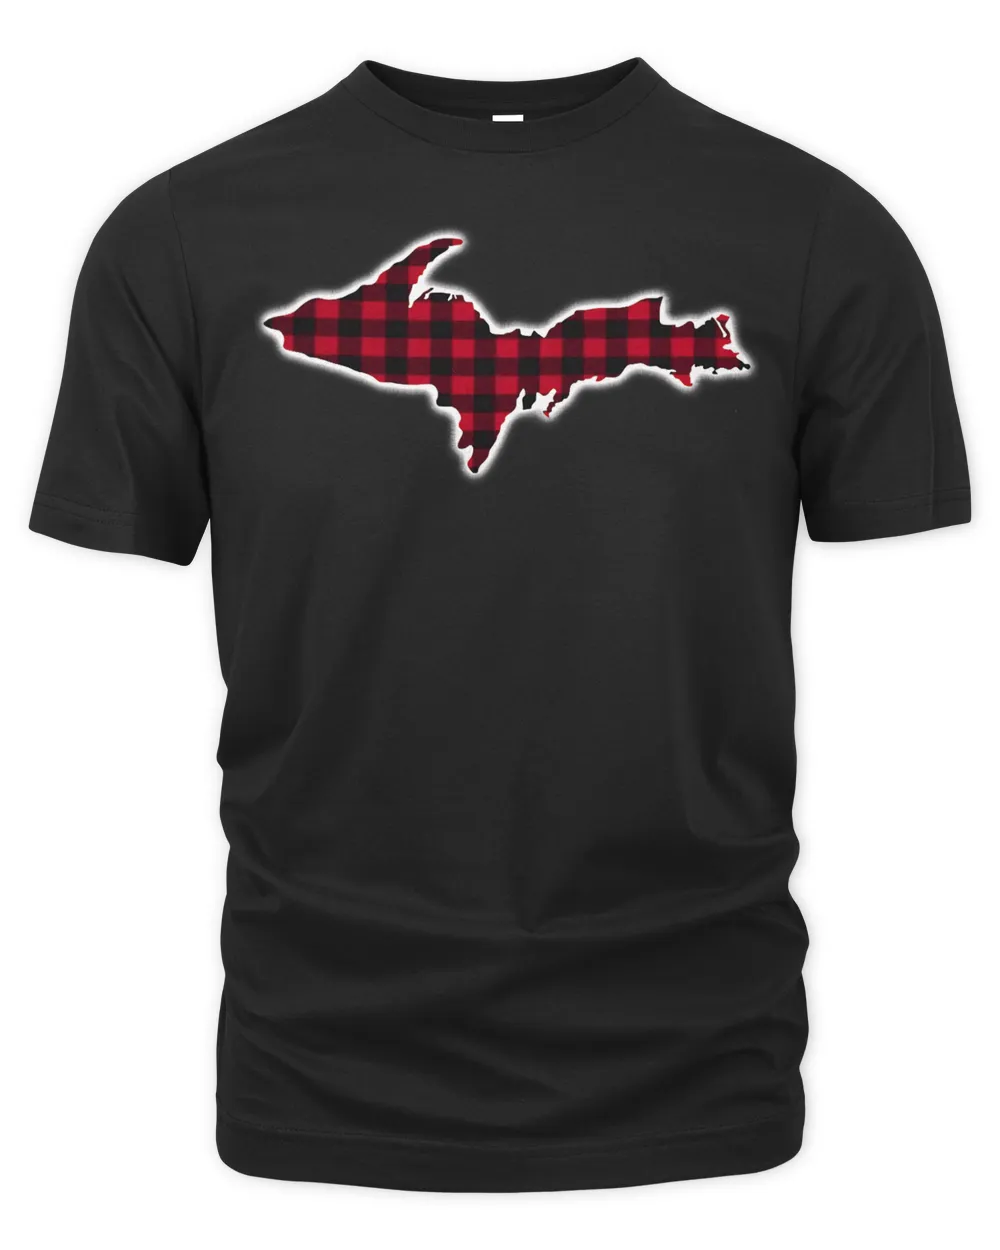 UP Upper Peninsula Buffalo Check Yoopers Hunter Plaid T-Shirt